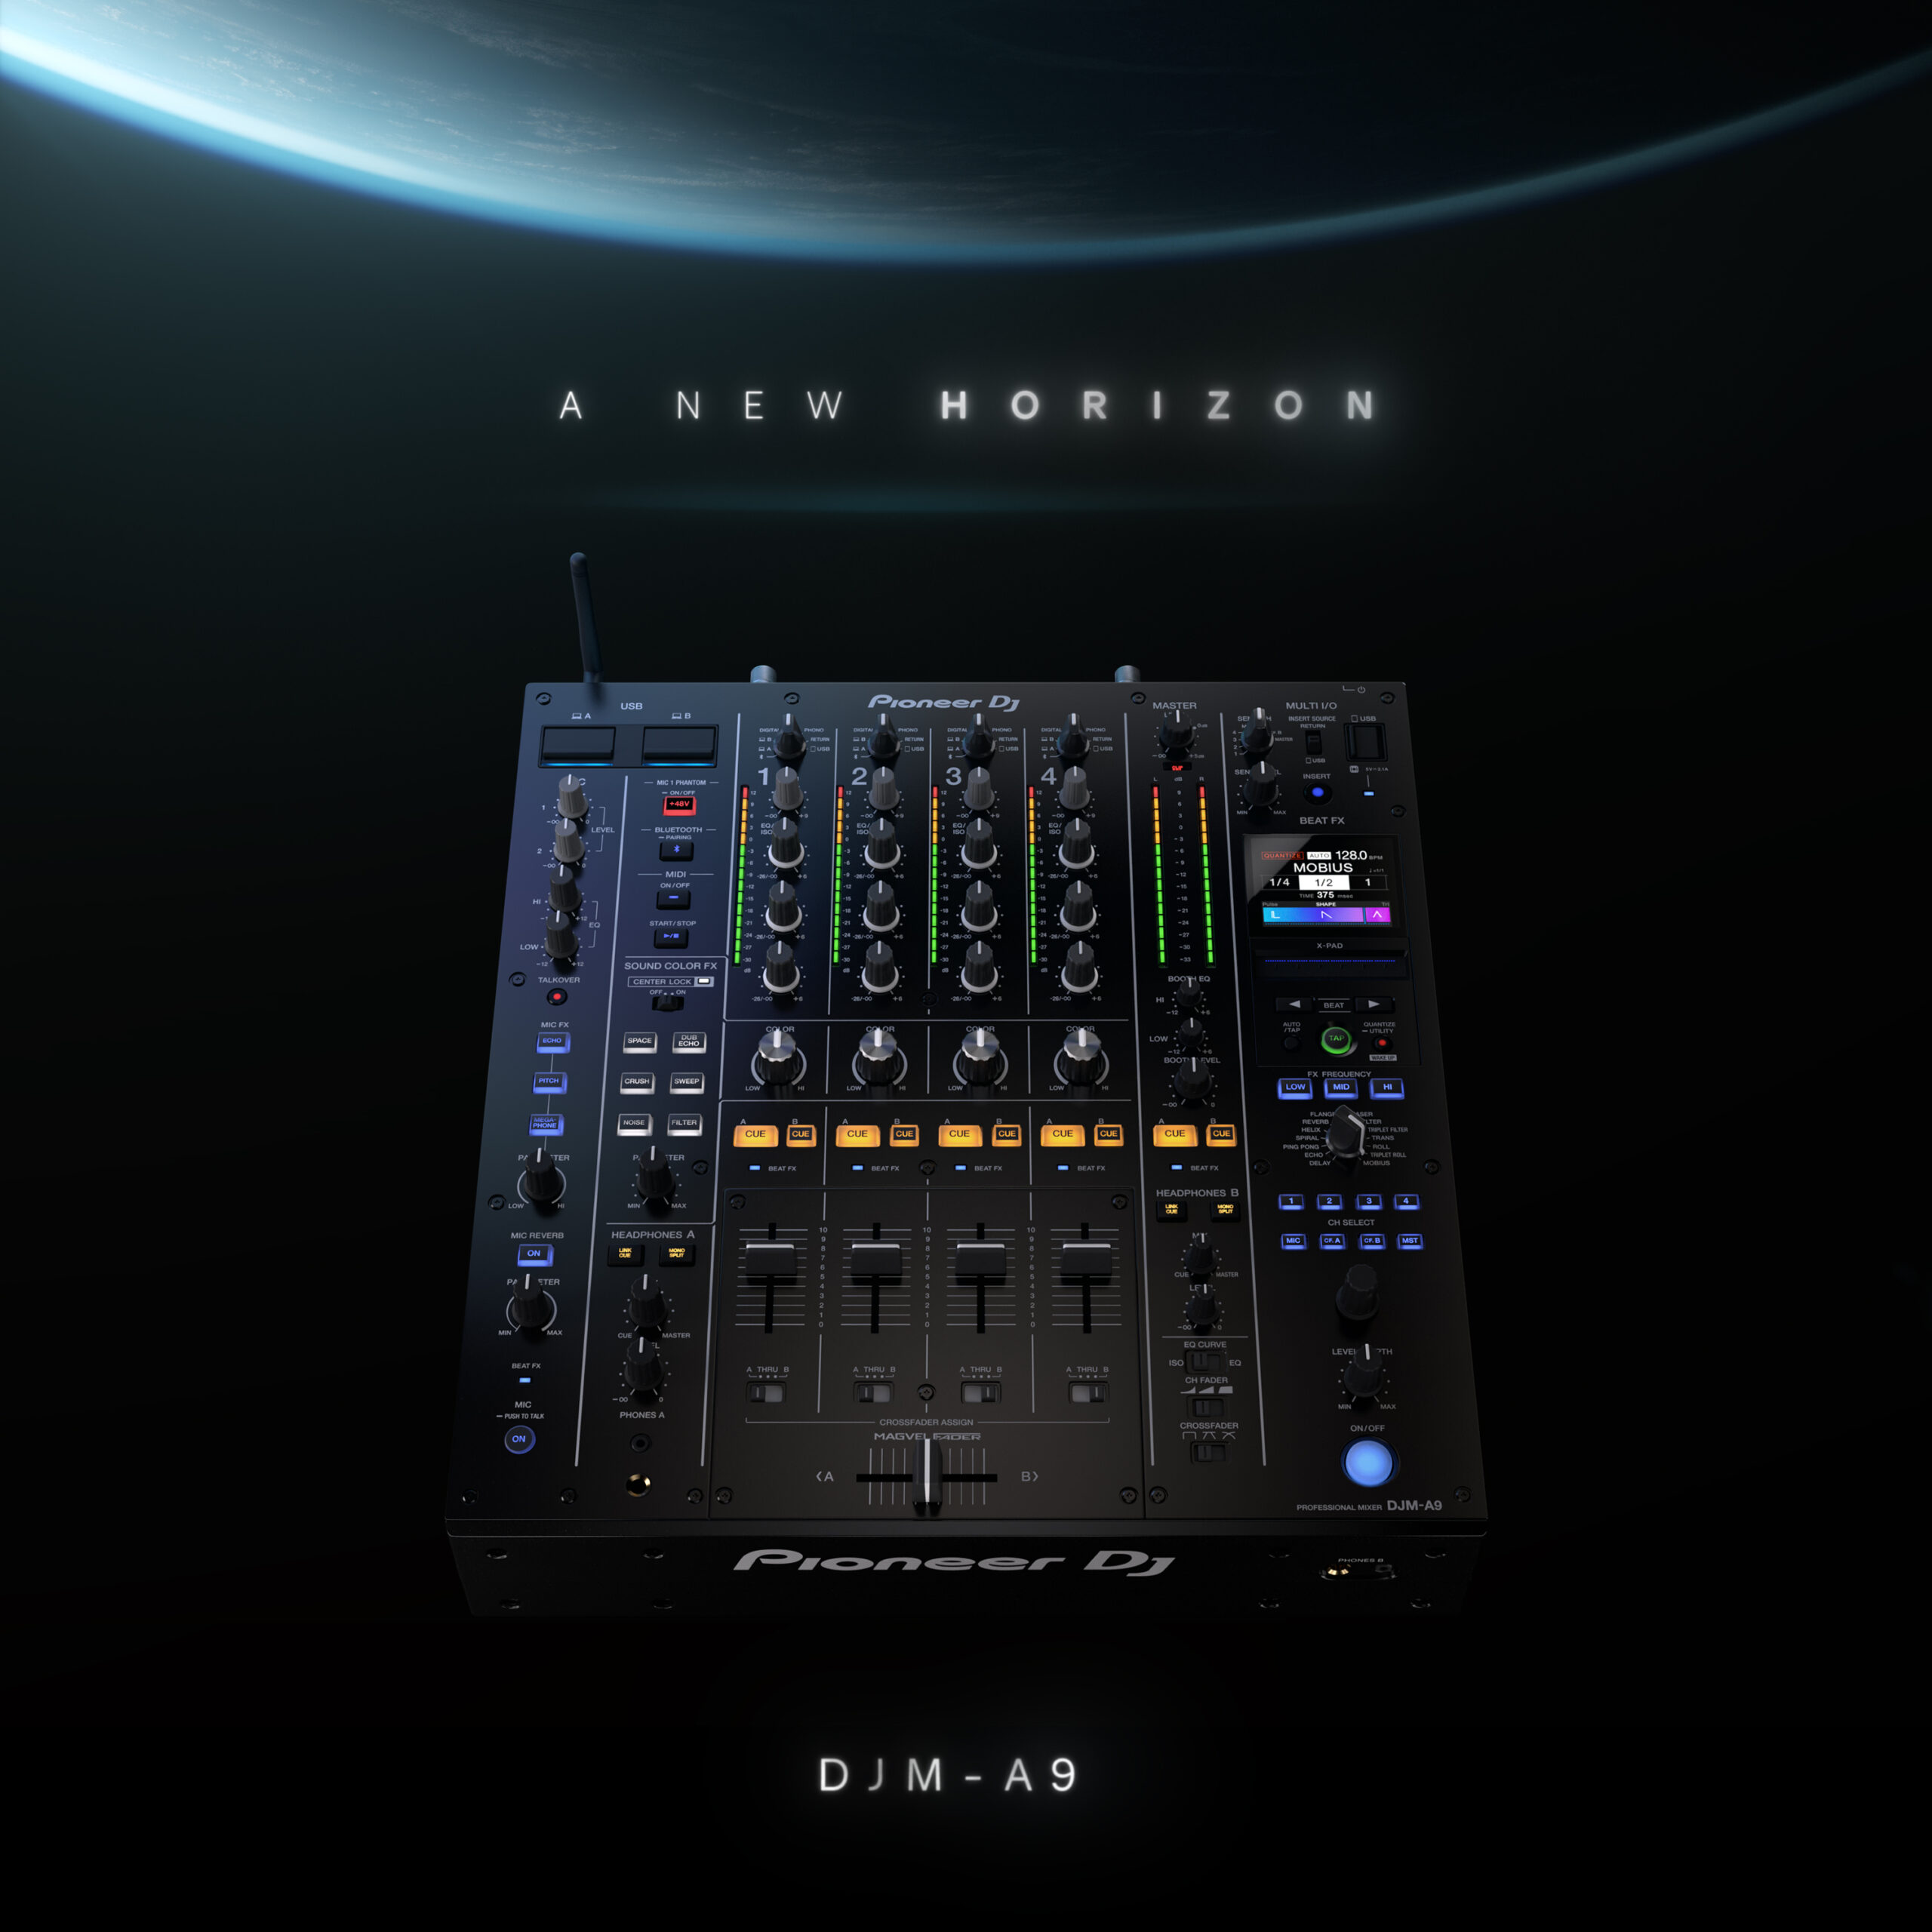 A New Horizon: Introducing the DJM-A9 next-generation professional DJ